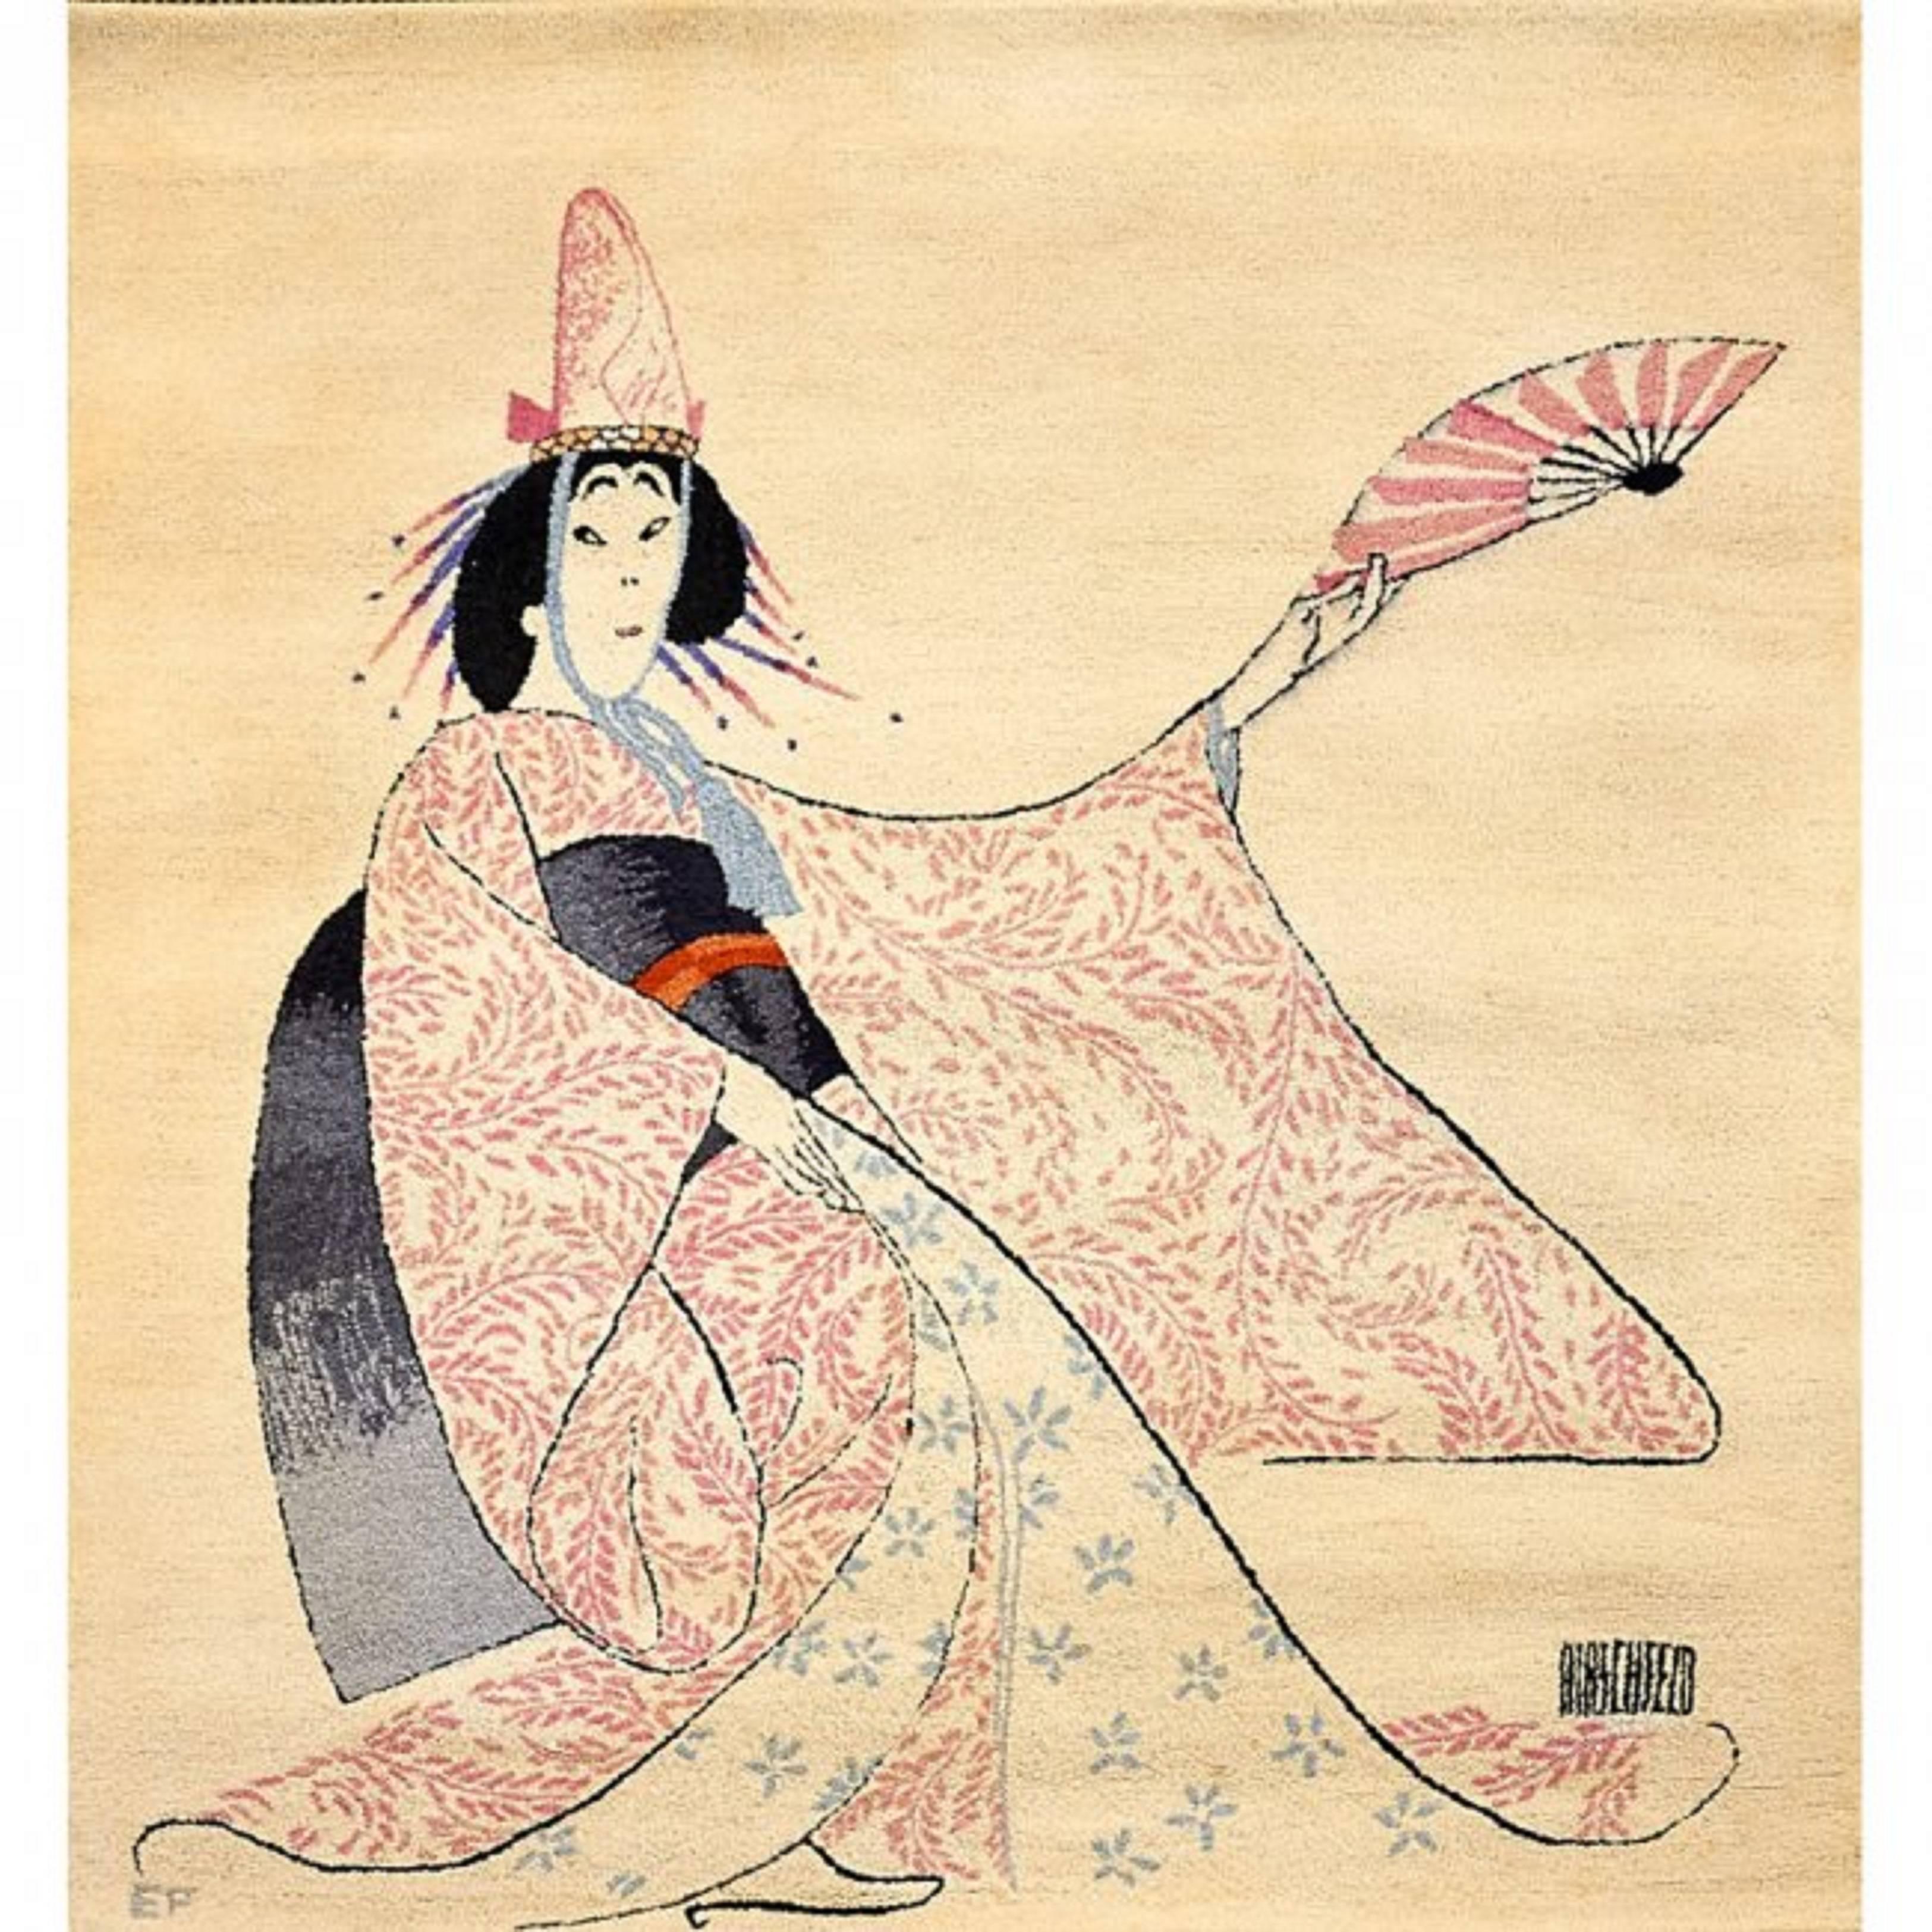 Rare Edward Fields "Geisha with Fan" Al Hirschfeld Tapestry Rug - Mixed Media Art by Albert Al Hirschfeld